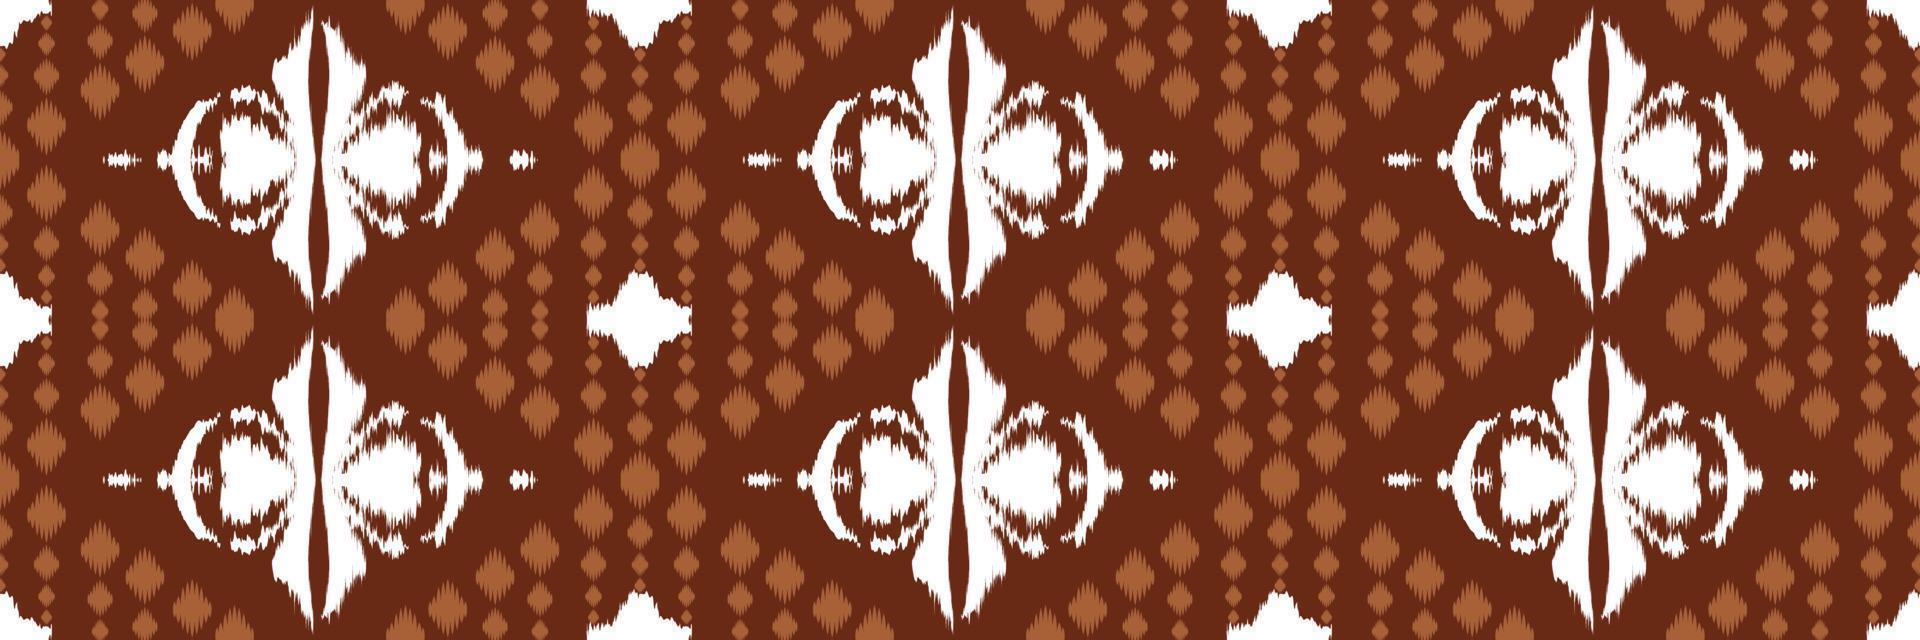 batik motivo textil textura ikat patrón sin costuras diseño vectorial digital para imprimir saree kurti borde de tela símbolos de pincel muestras elegantes vector